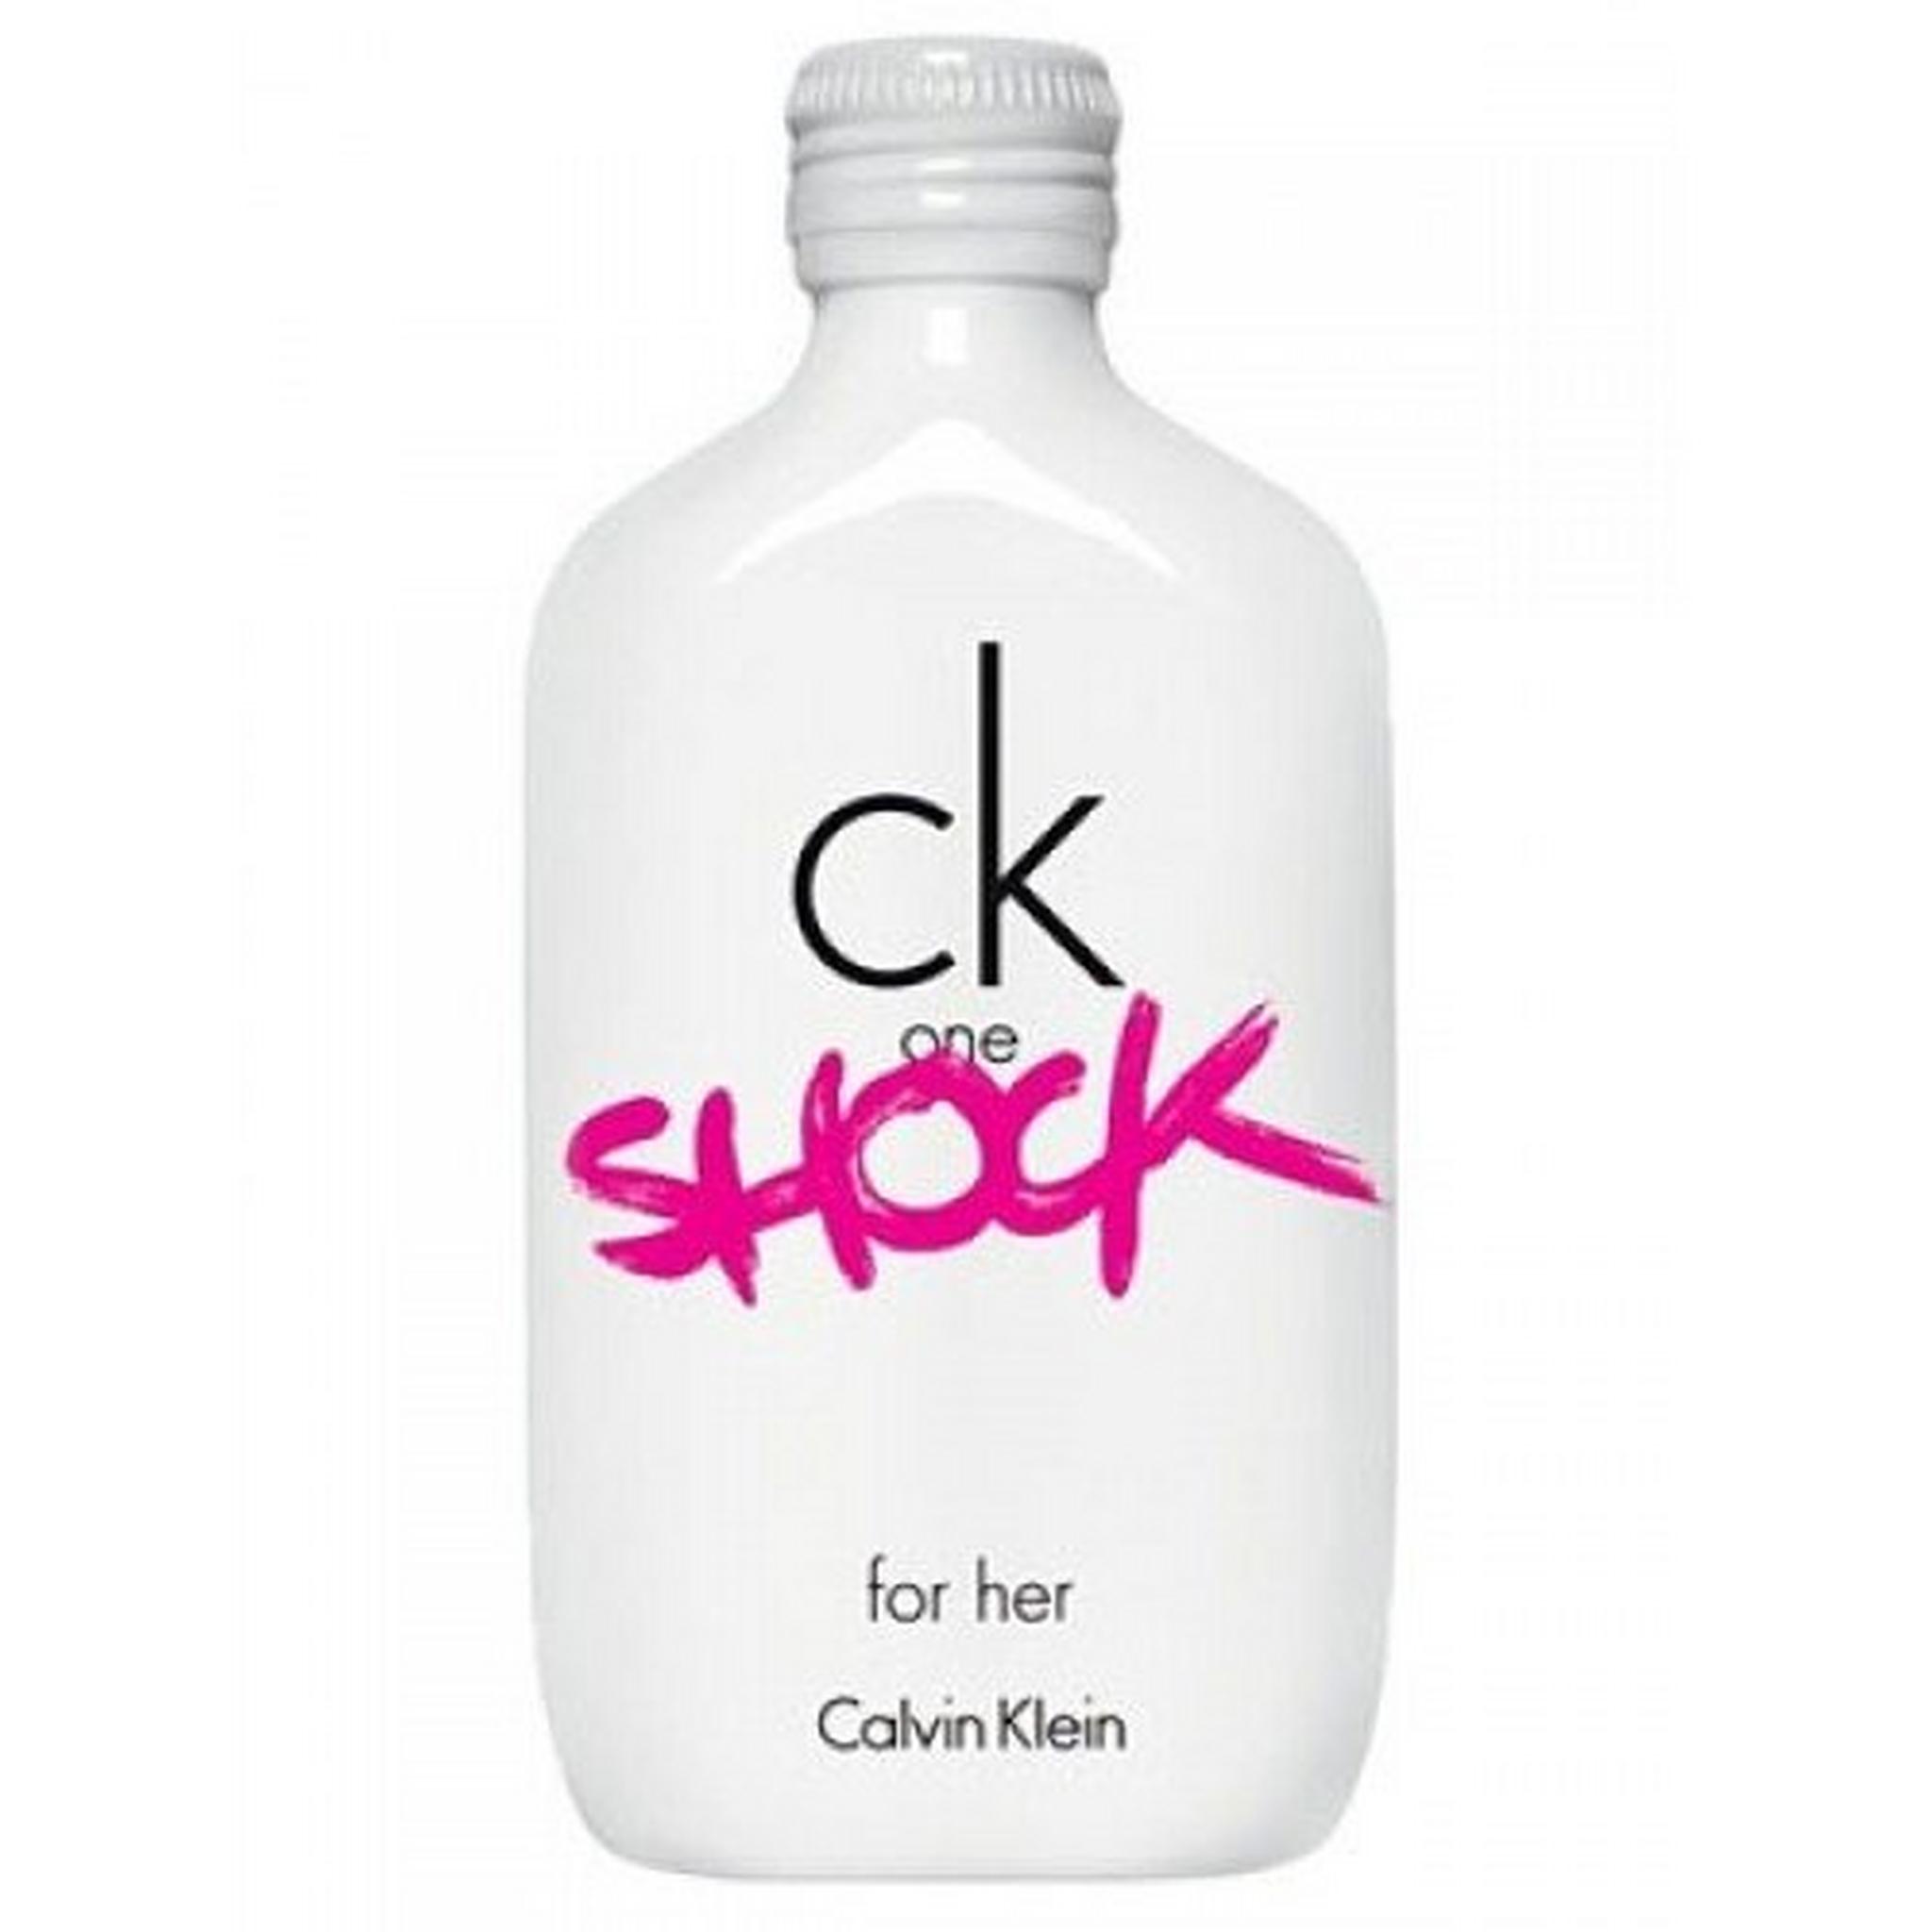 CALVIN KLEIN CK One Shock - Eau de Toilette 200 ml